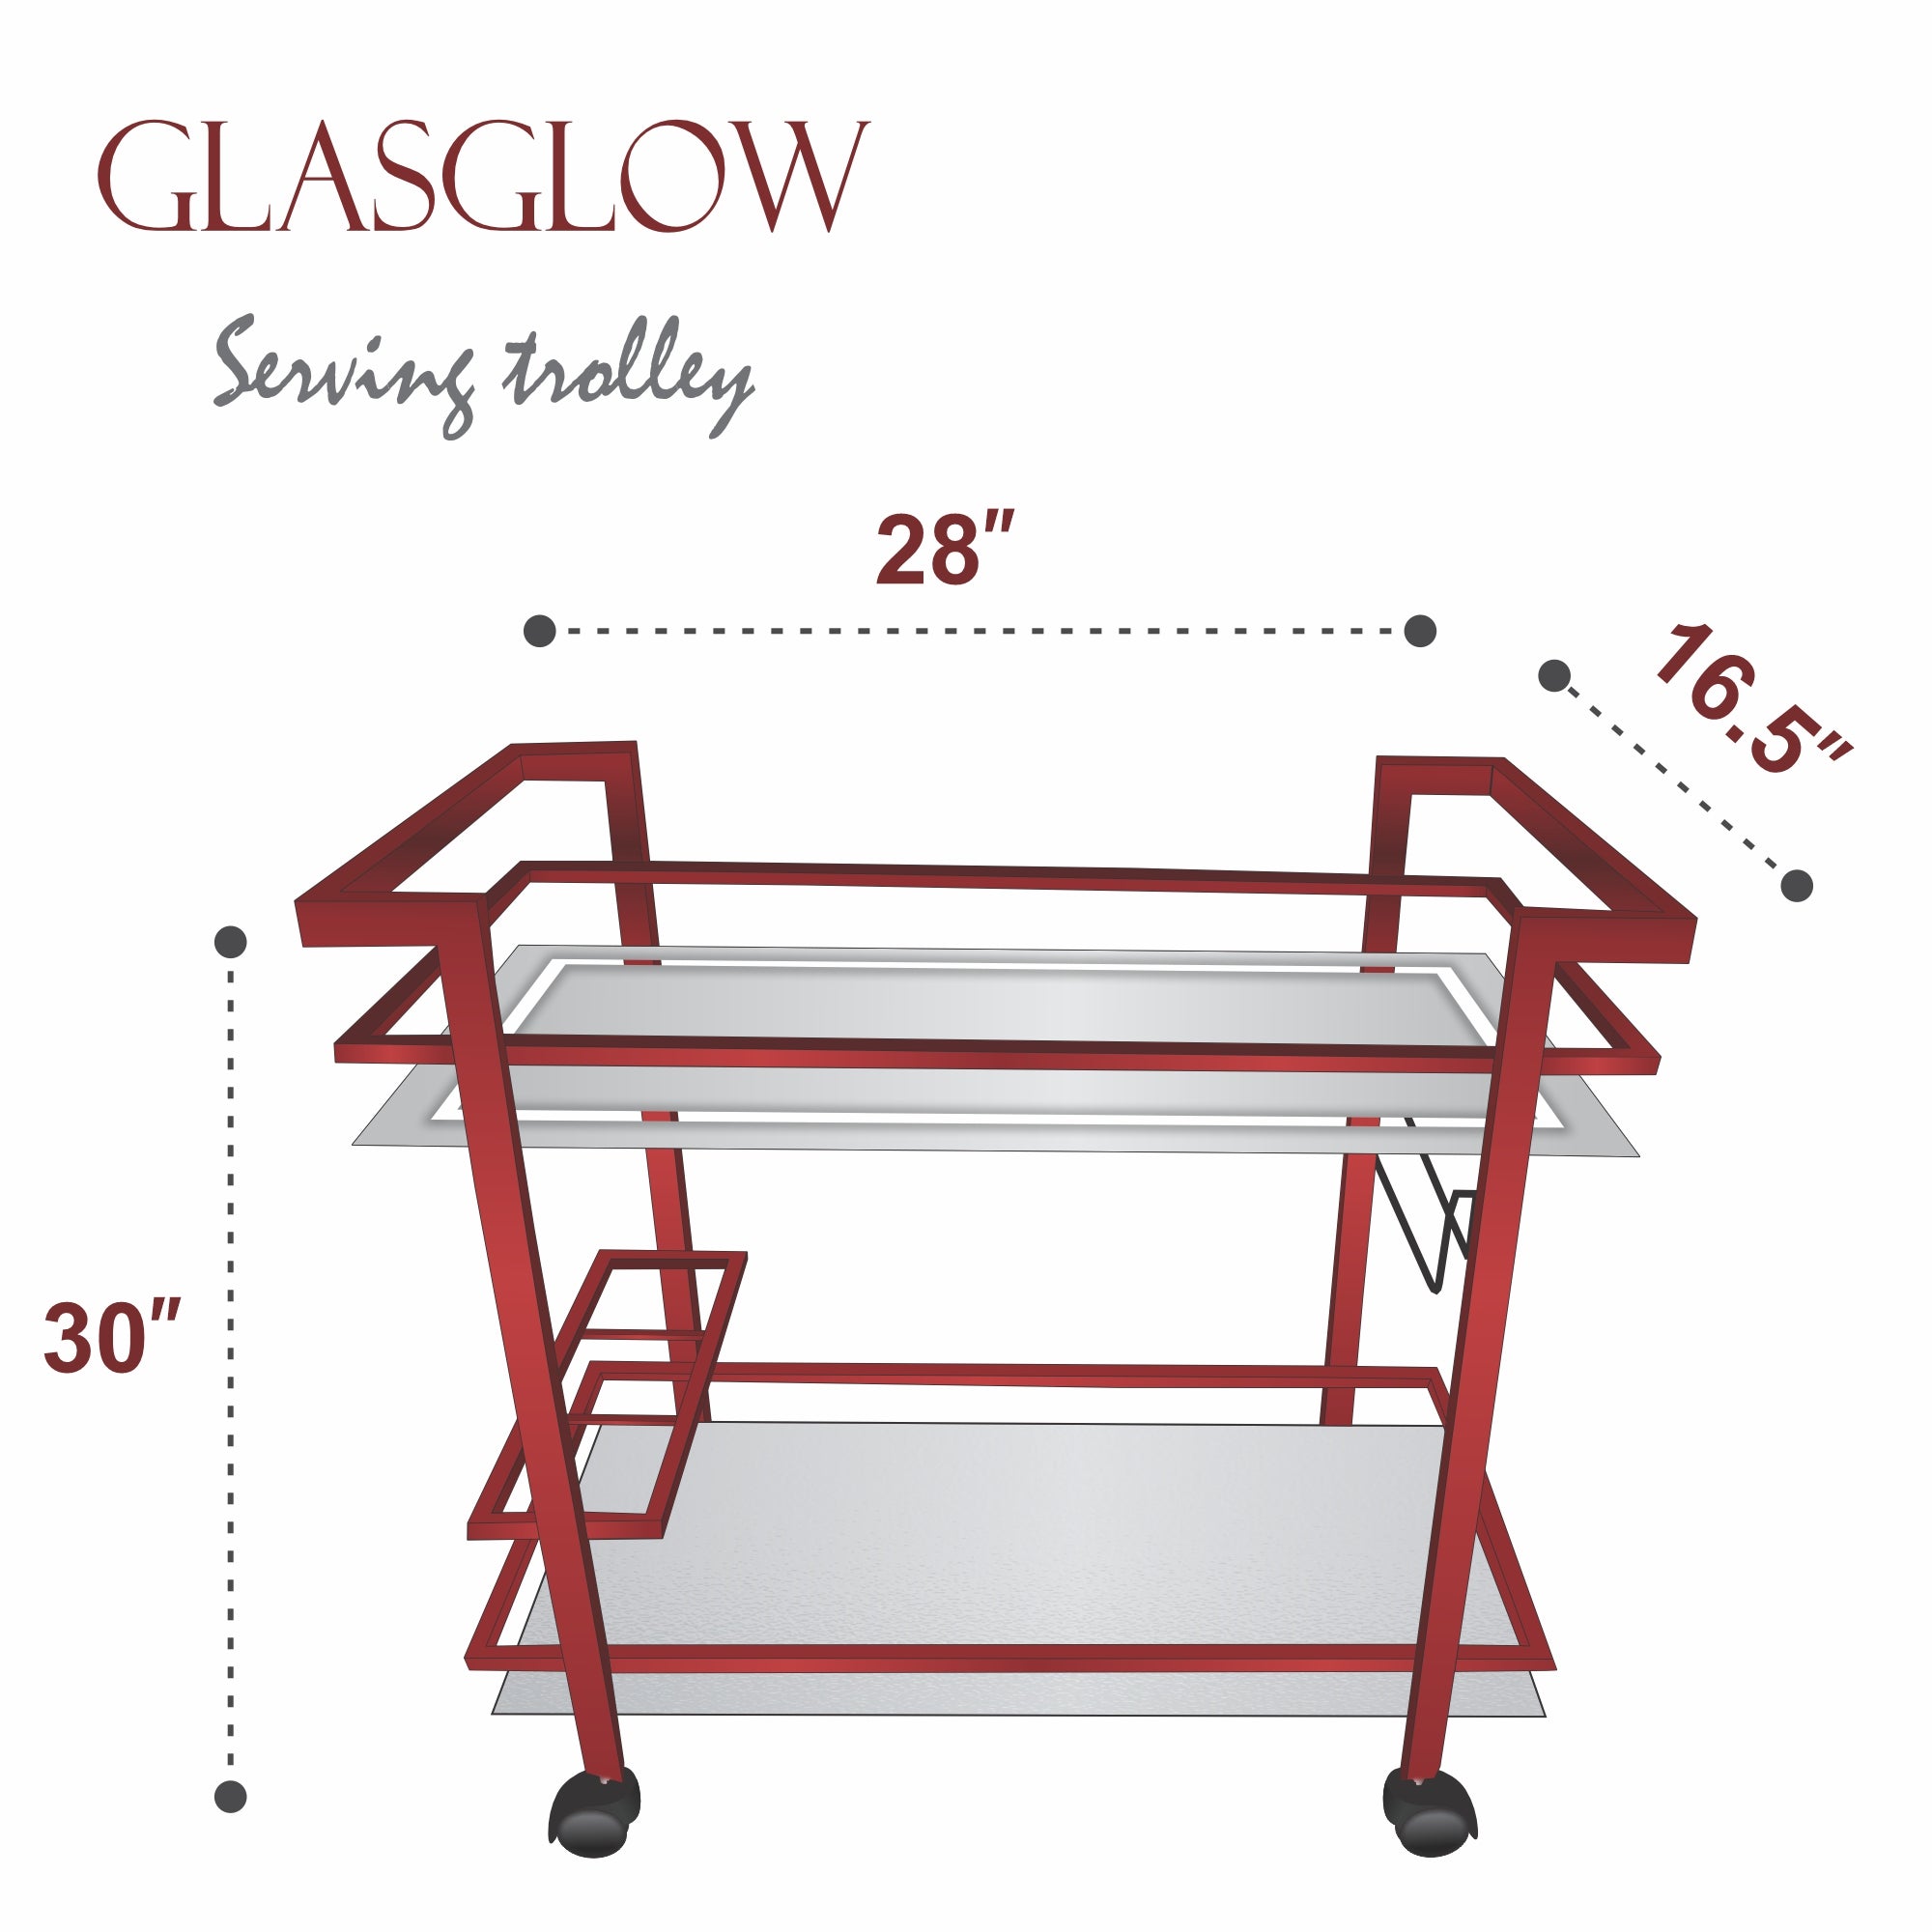 GLASGLOW Serving Trolley - serving cart size 30" x 16.5" x 28" Silver